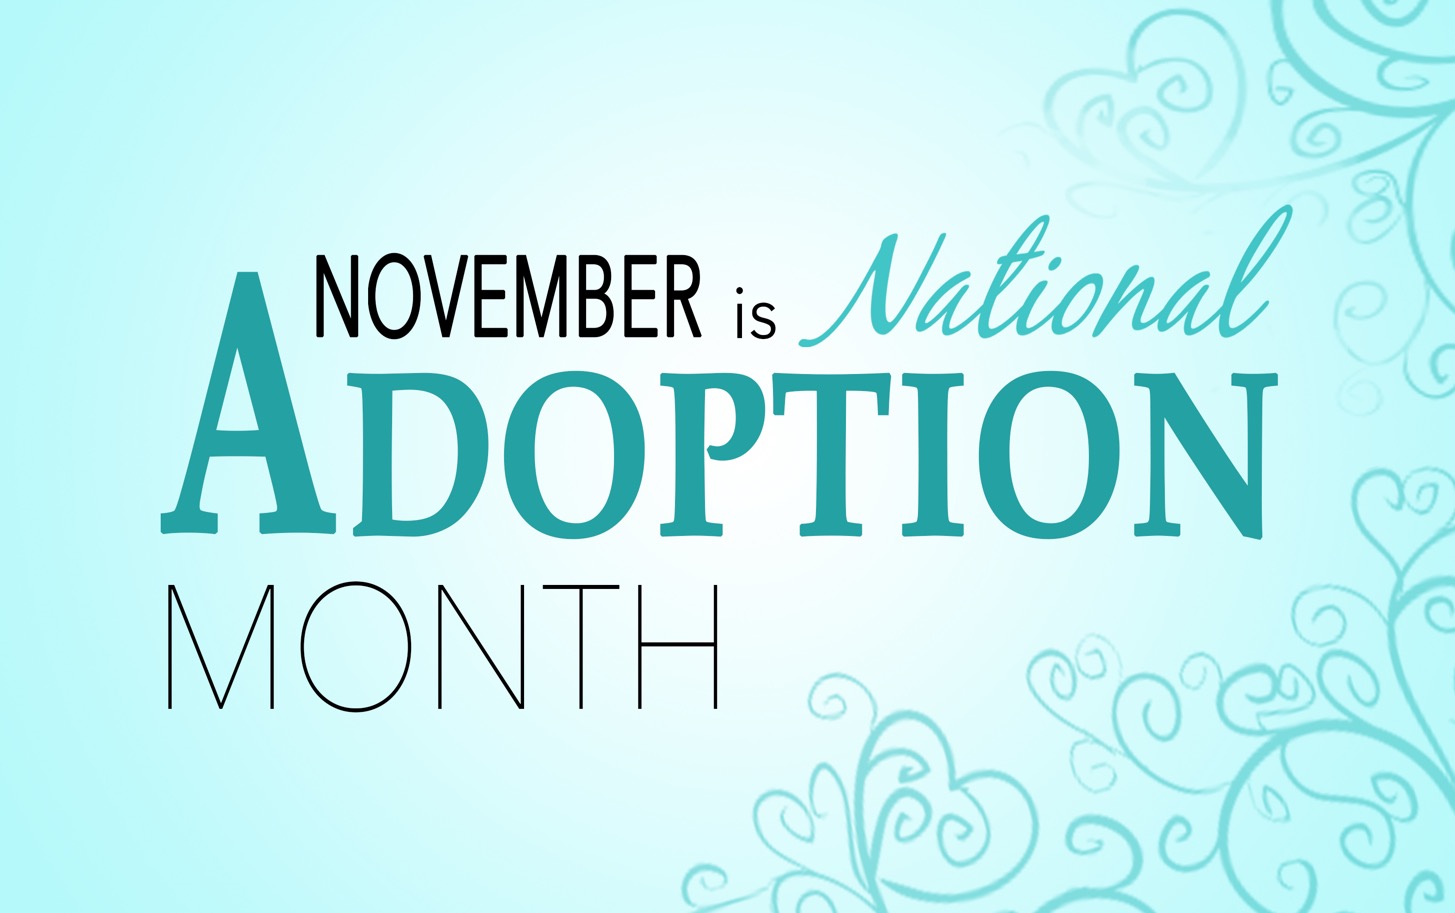 November - National Adoption Month